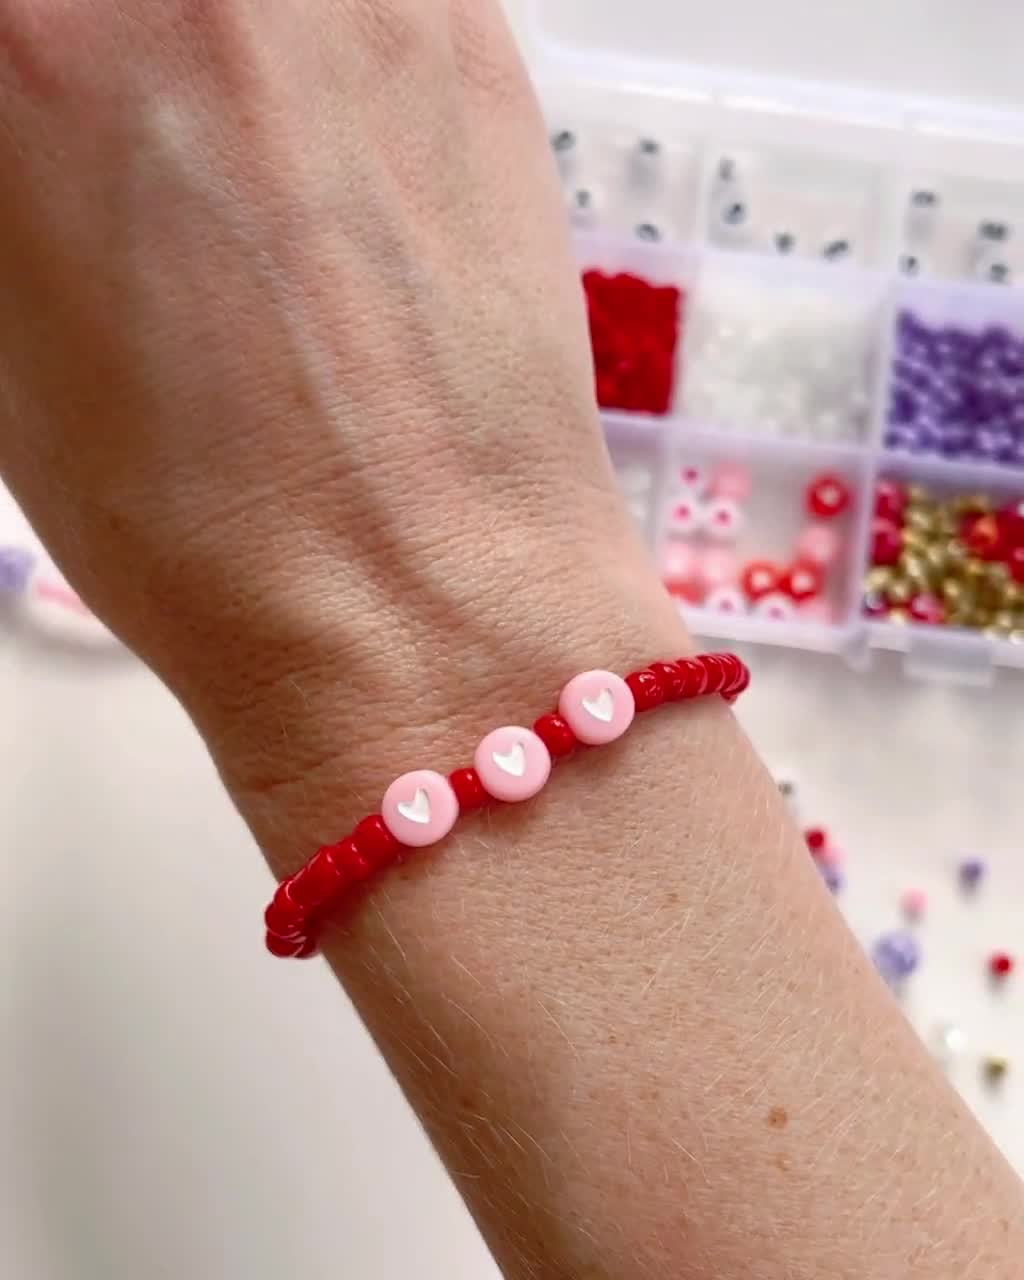 Coloured crystal bead bracelet Diy kit para hacer pulseras Toys Girls  Manualidades Beads bracelet beads toys